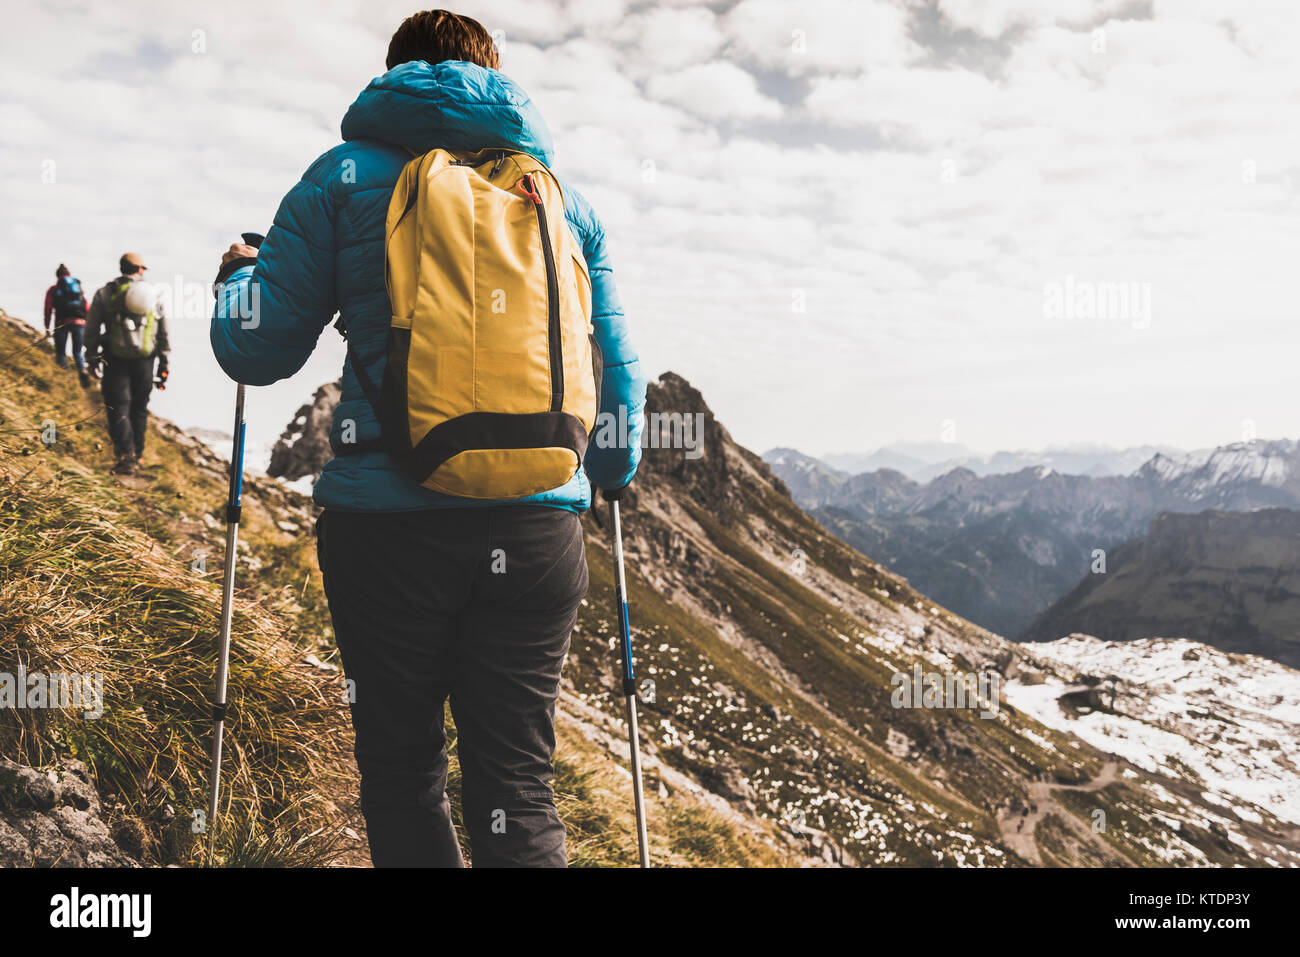 Germany, Bavaria, Oberstdorf, hikers walking in alpine scenery Stock Photo